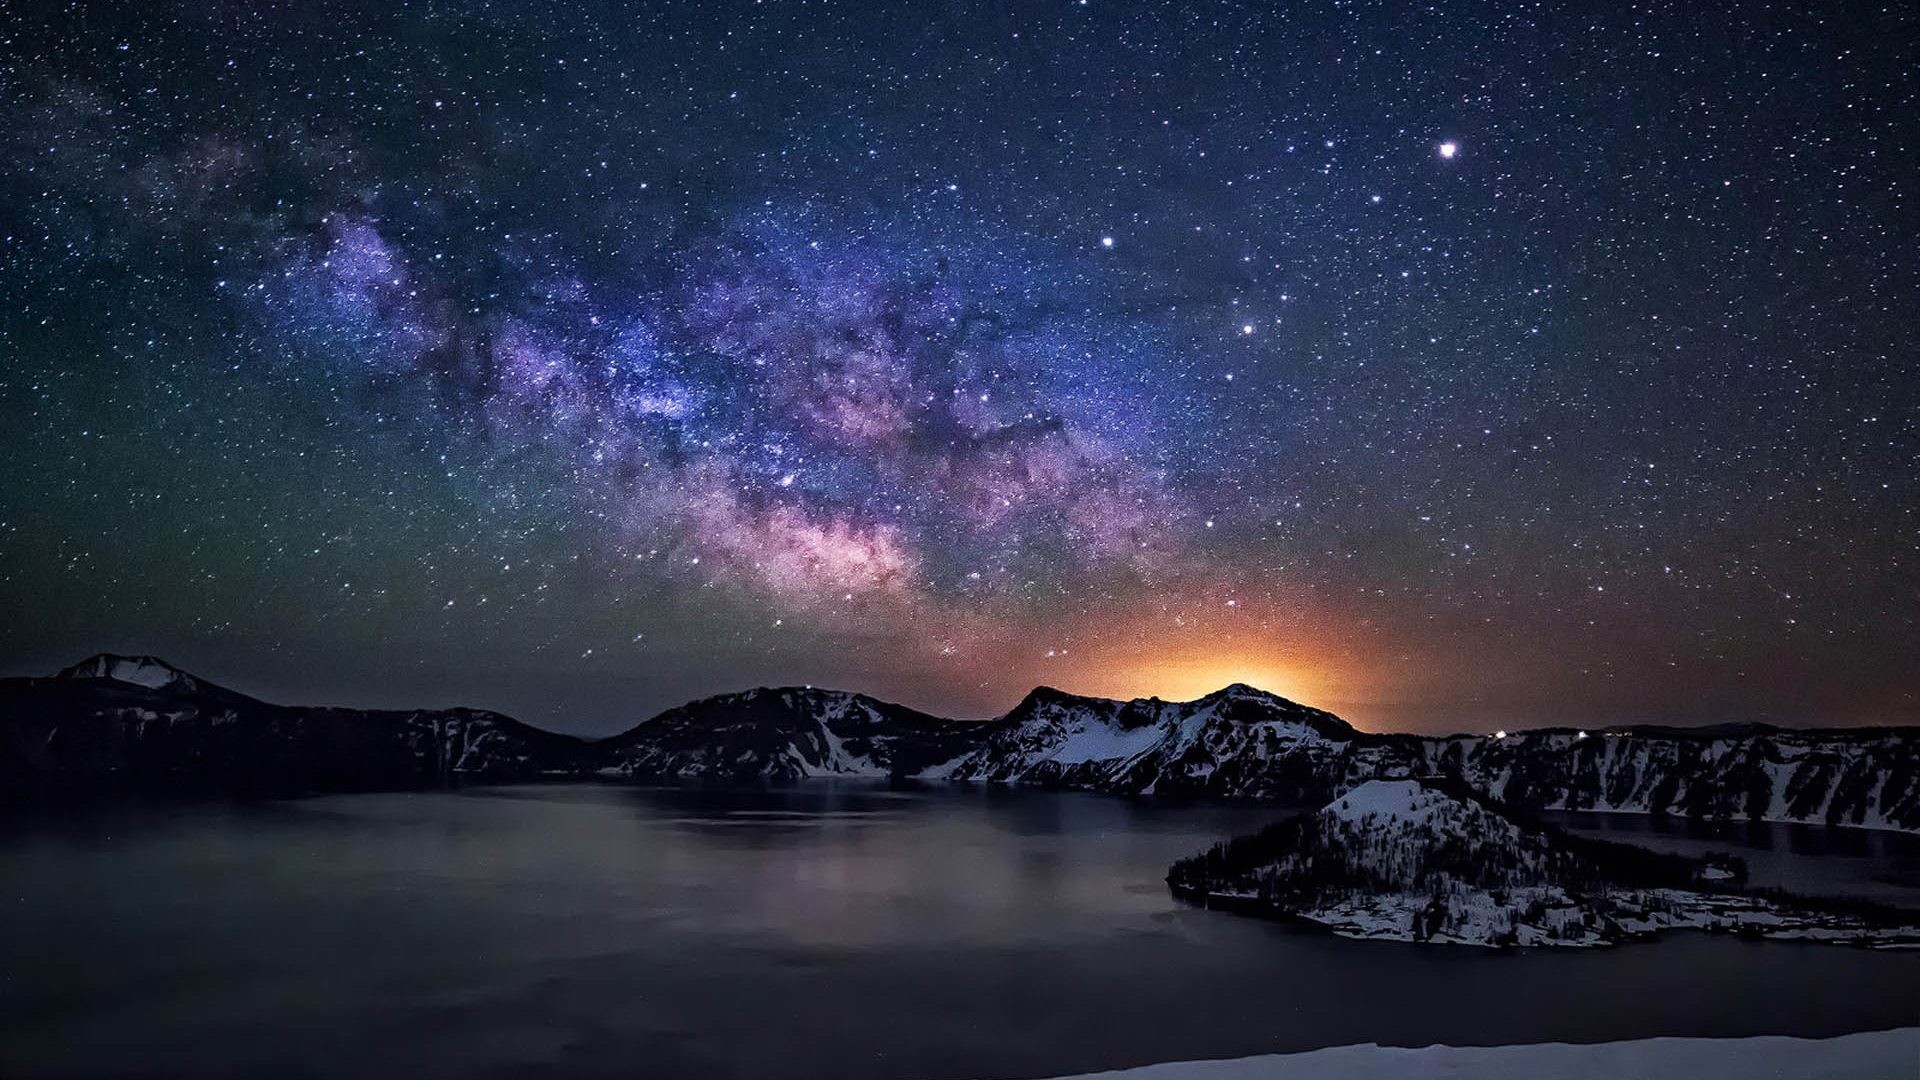 1920x1080 Crater-lake-night-sky-with-star-milkyway-Desktop-Wallpaper-HD -1920Ã1200-1920Ã1080